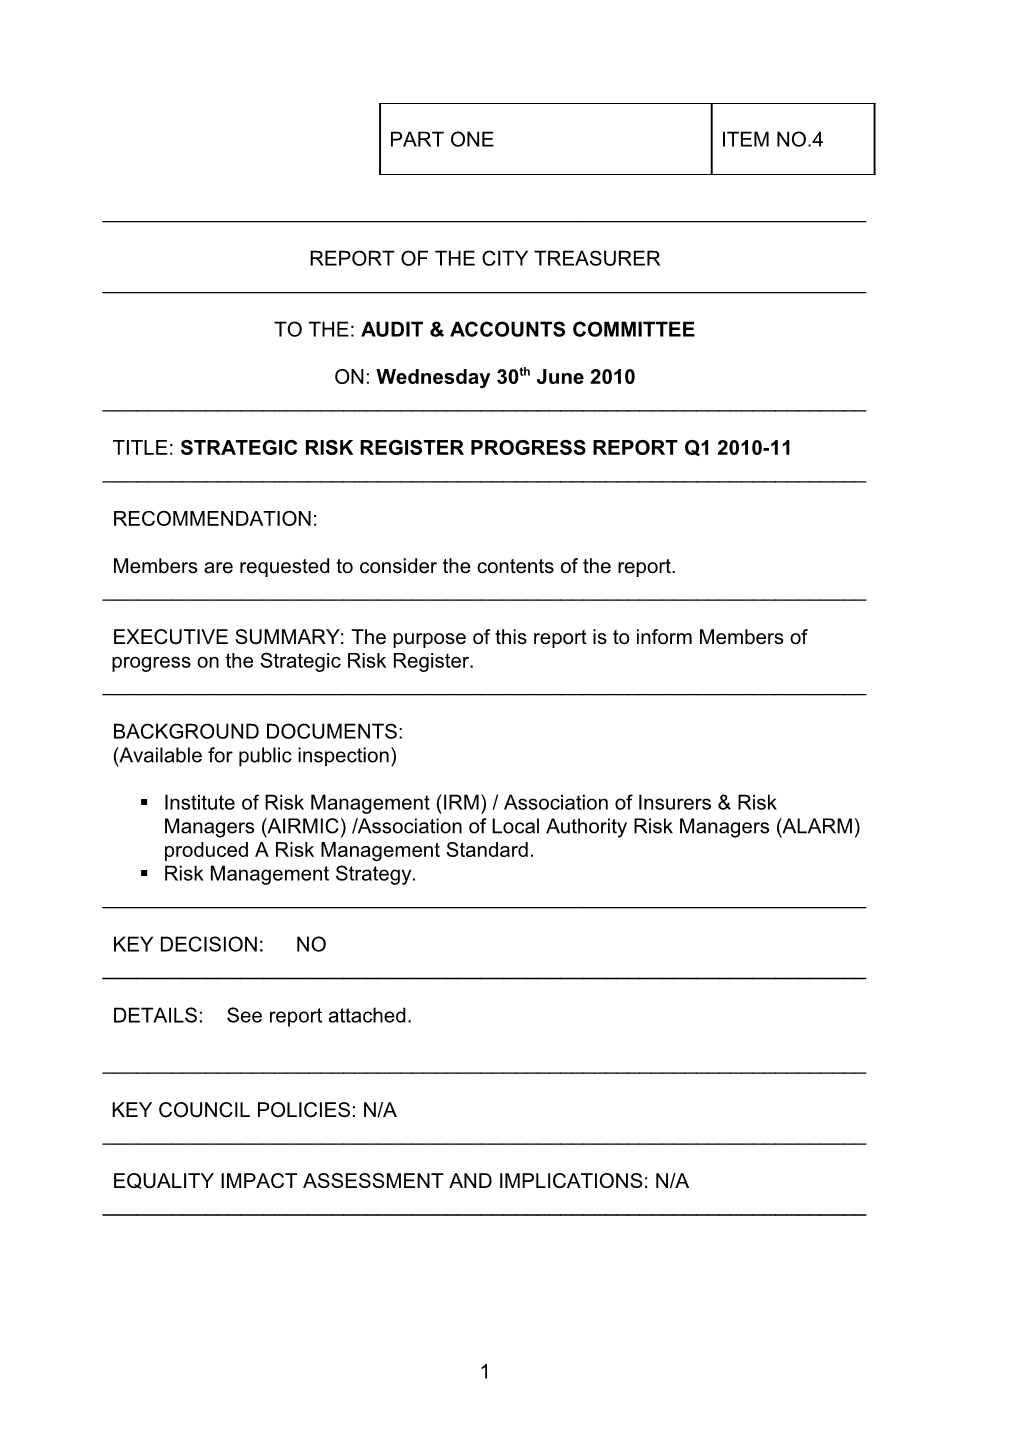 Report of the City Treasurer